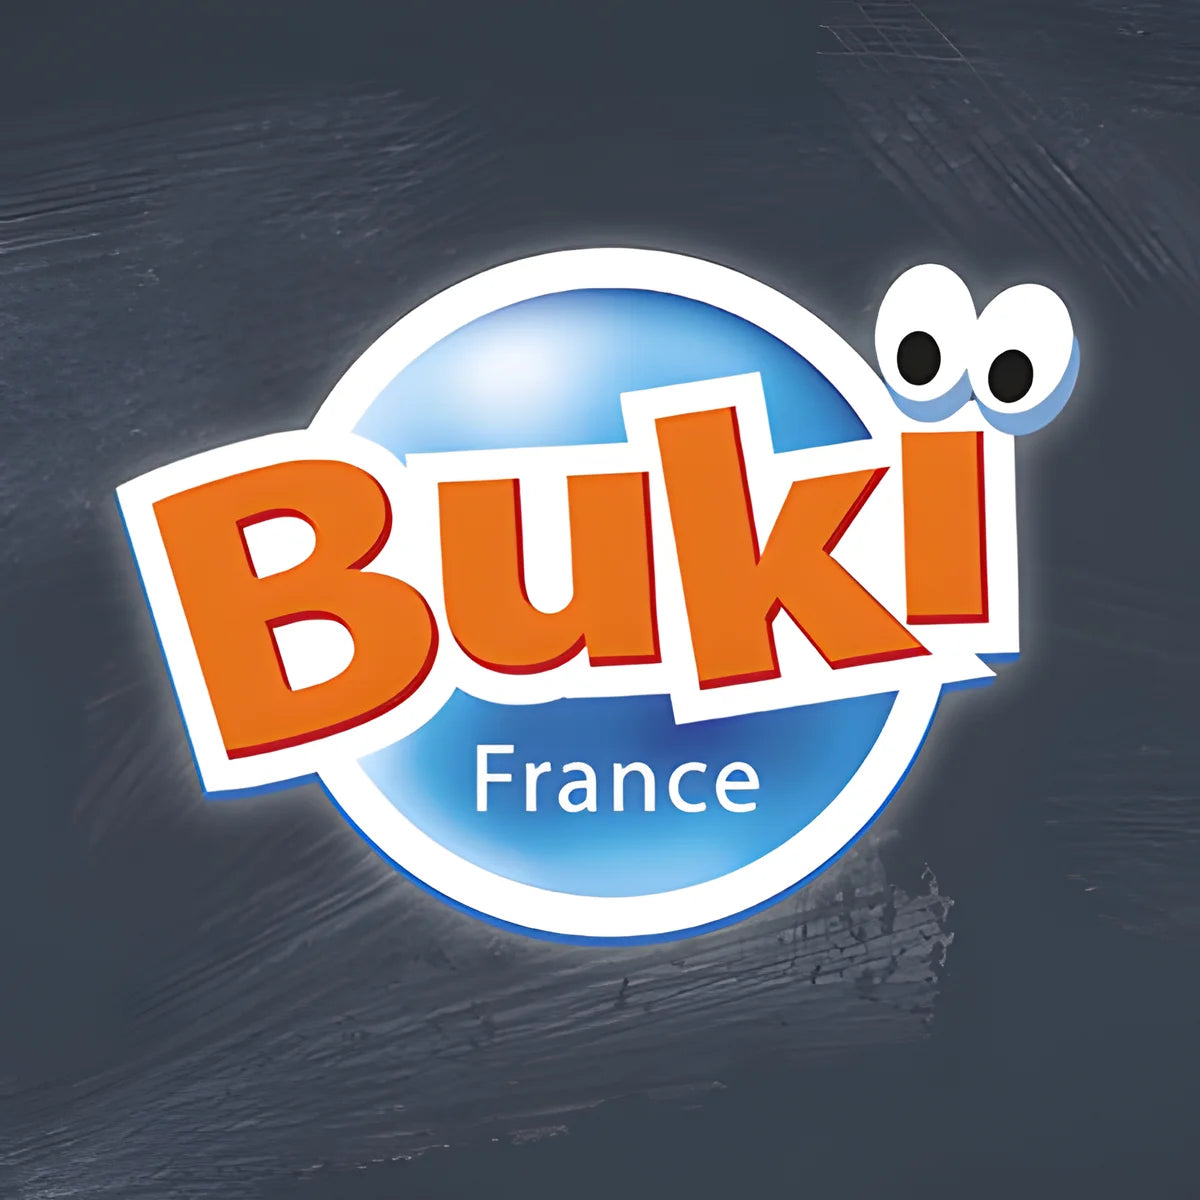 Buki France Archives - Happy Tots